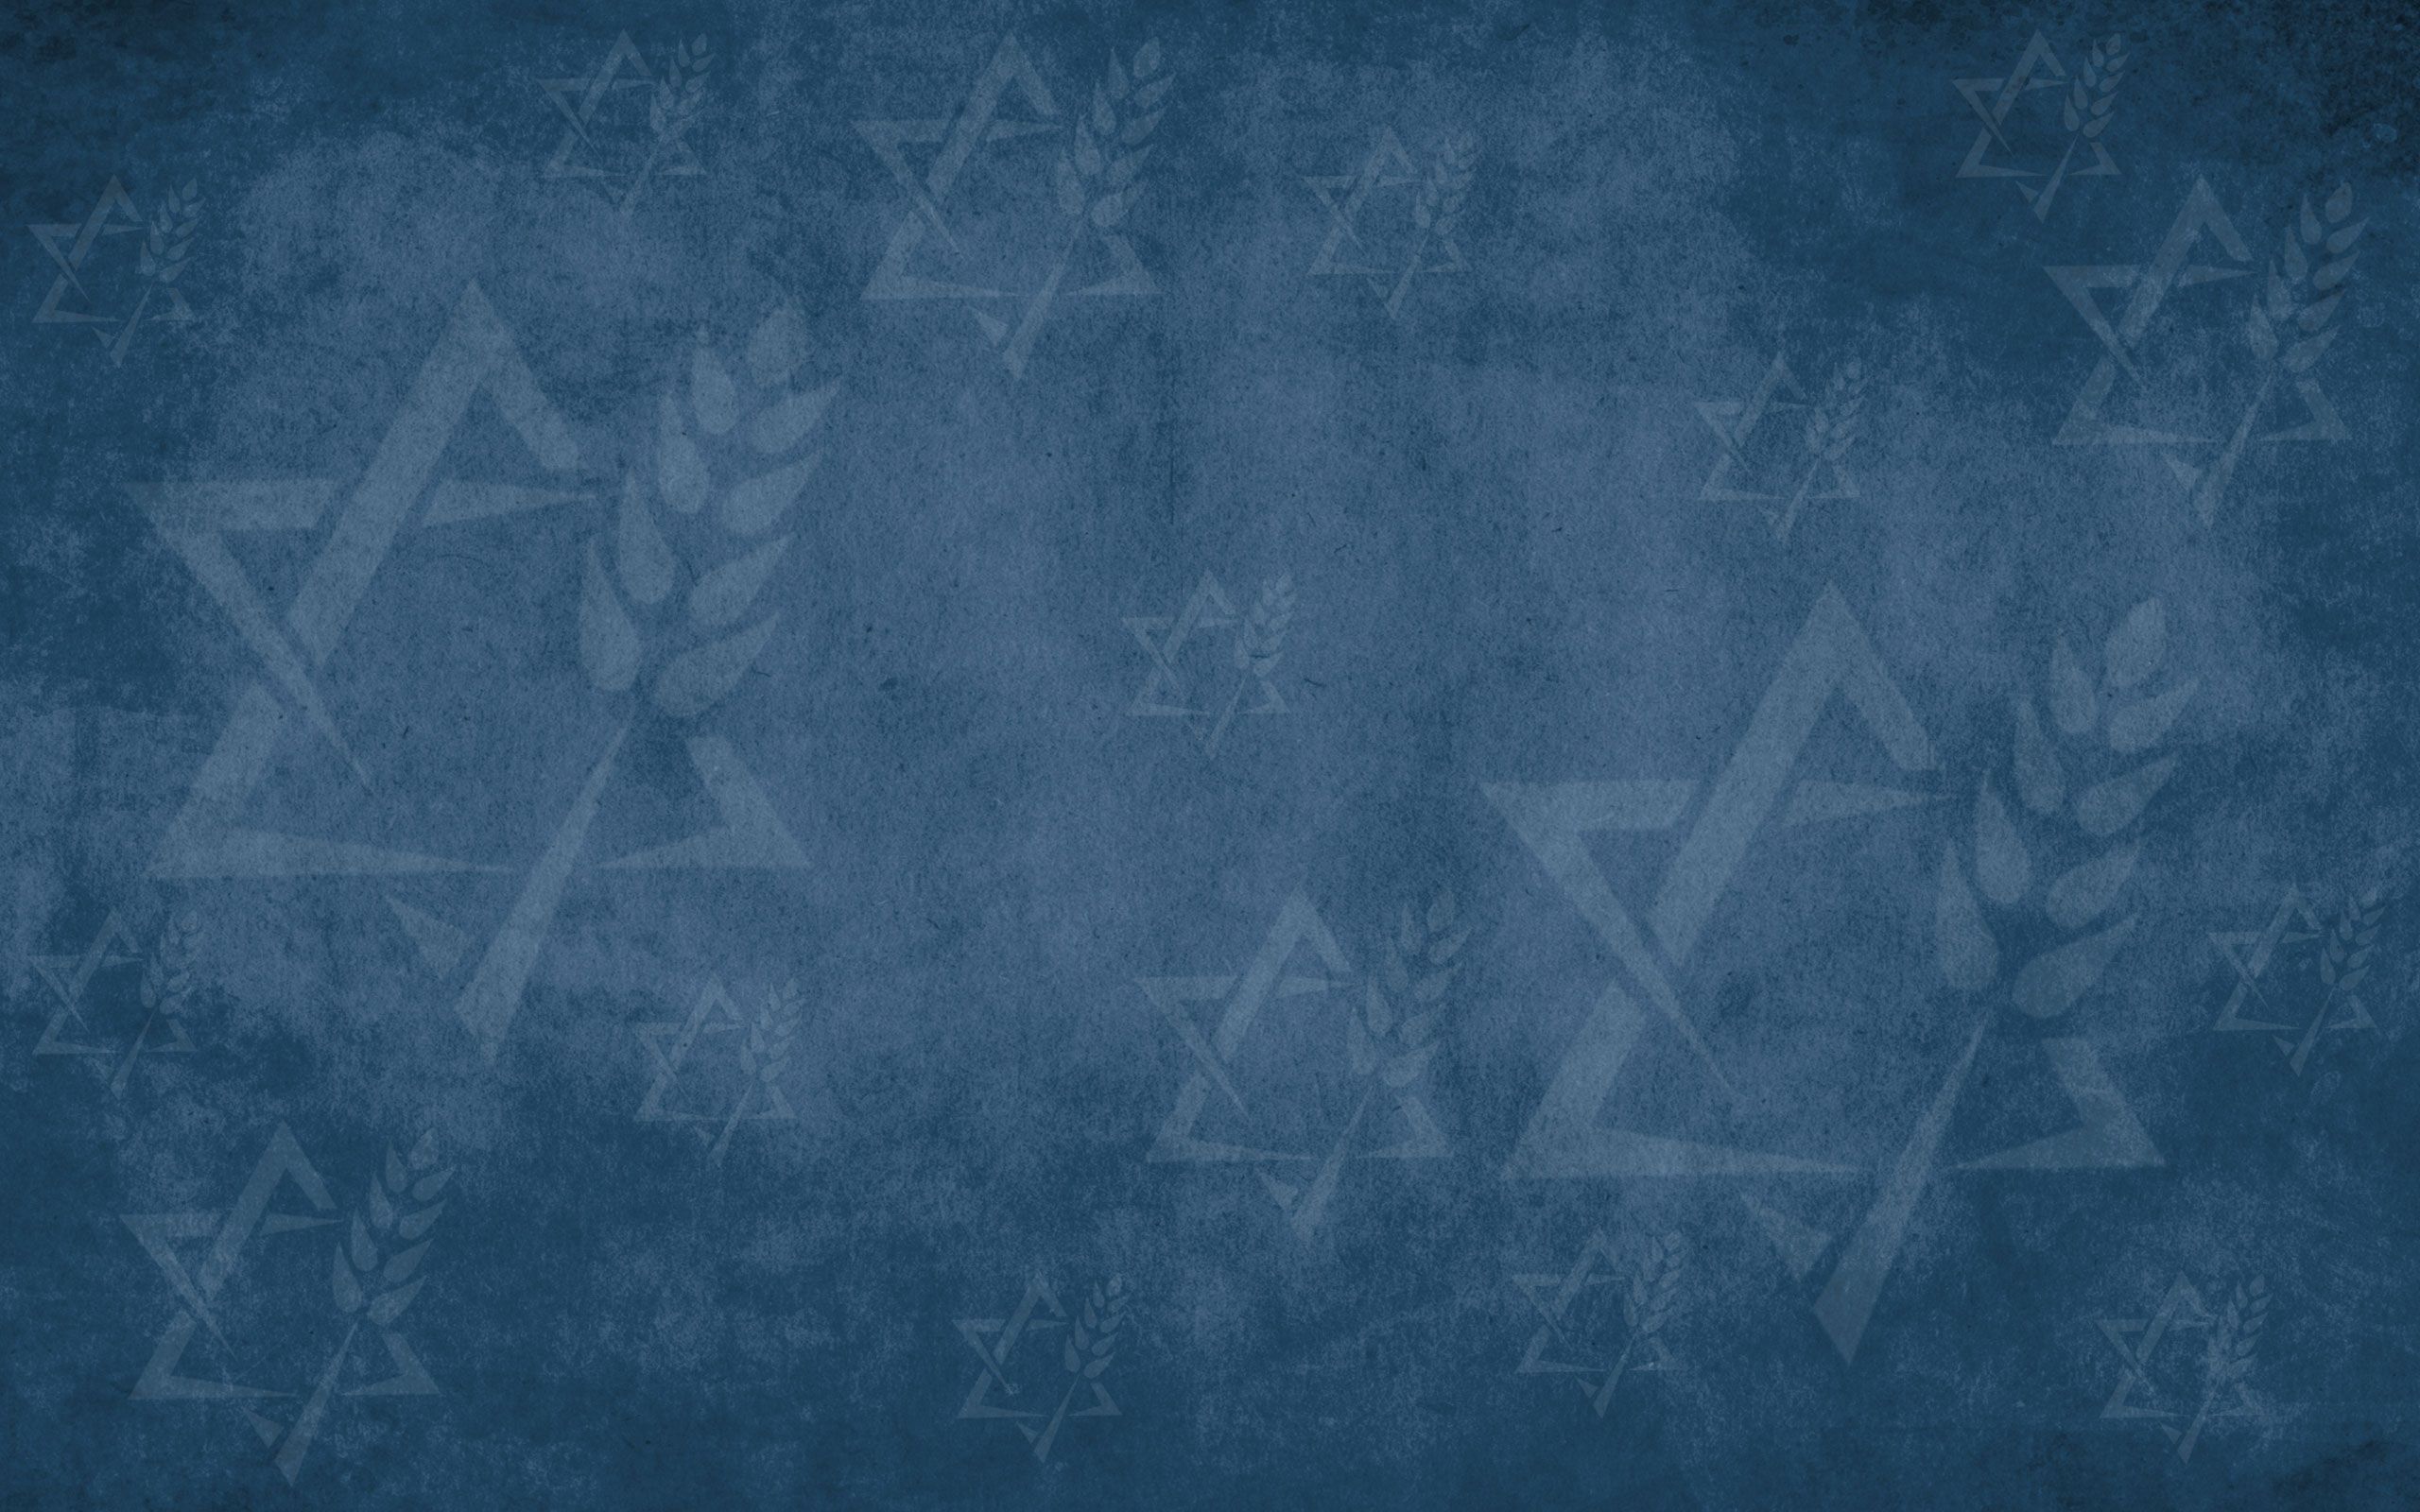 Messianic Jewish Wallpaper. Messianic jewish, Messianic, Lion of judah jesus